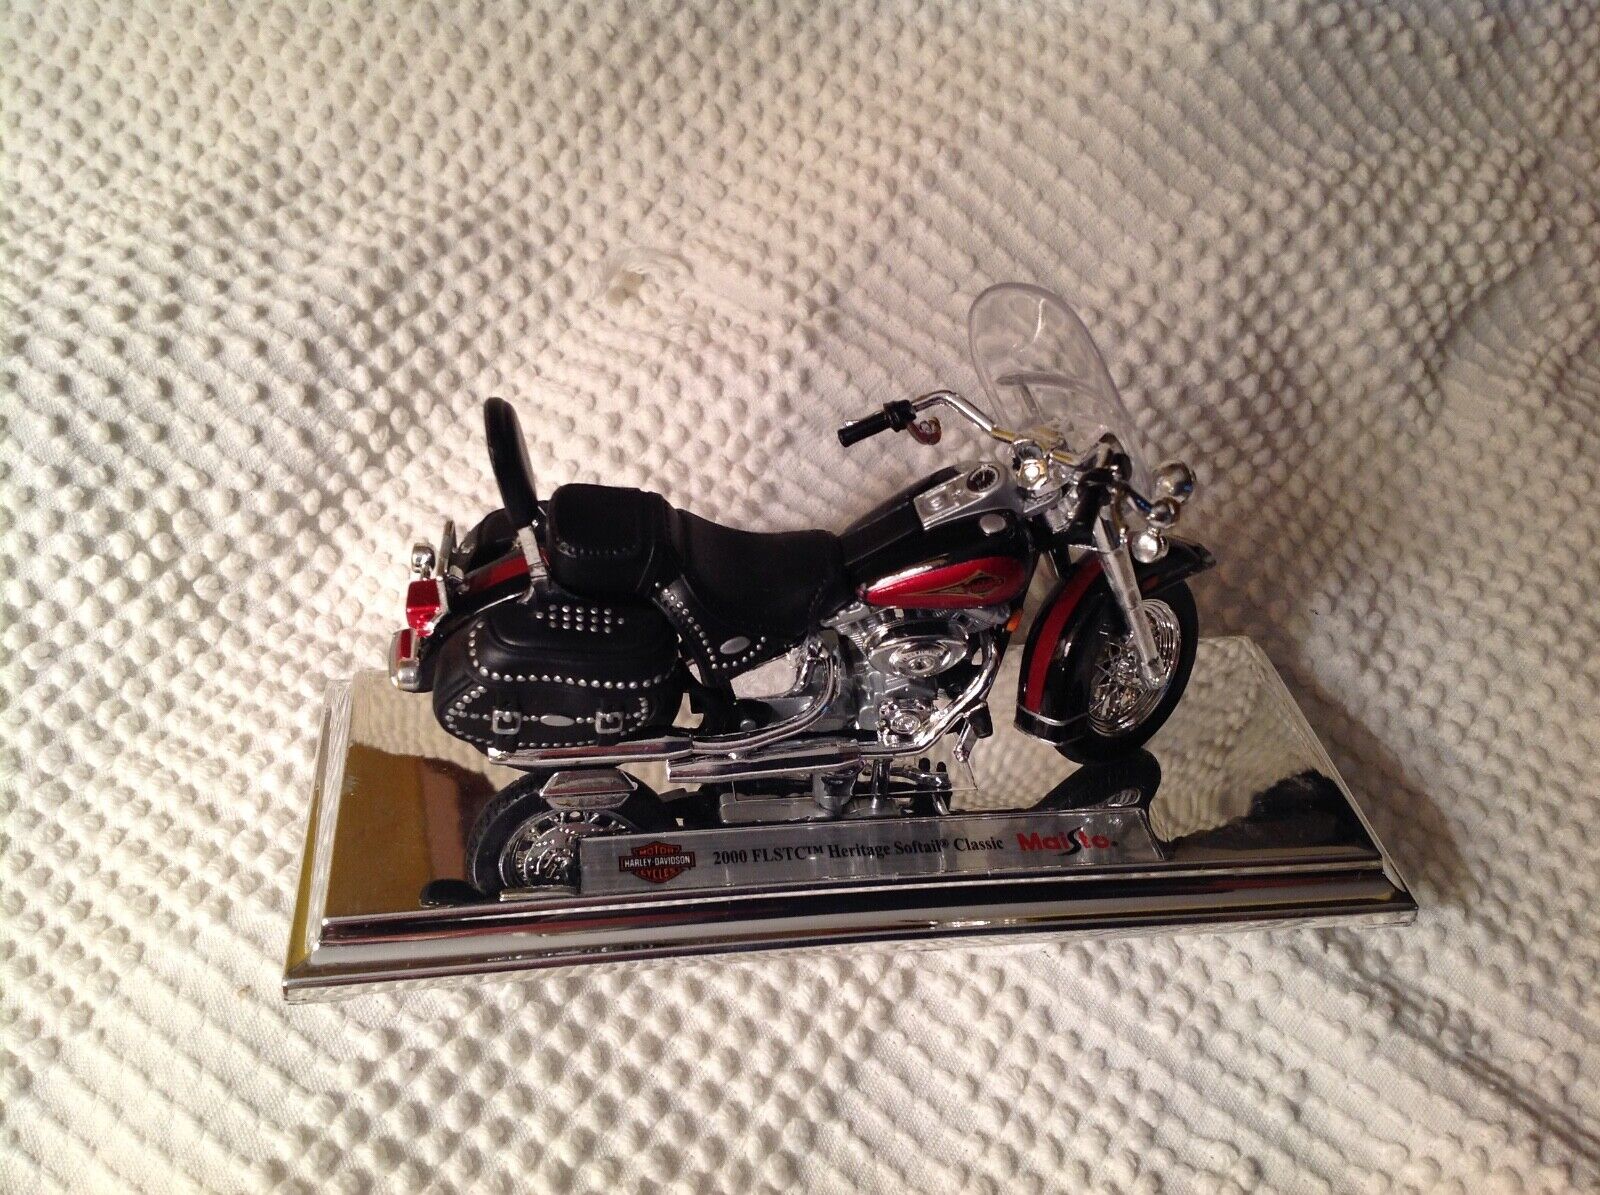 Maisto  Model Die Cast Harley Davidson Heritage Softail Classic ( 2000 FLSTC ) 